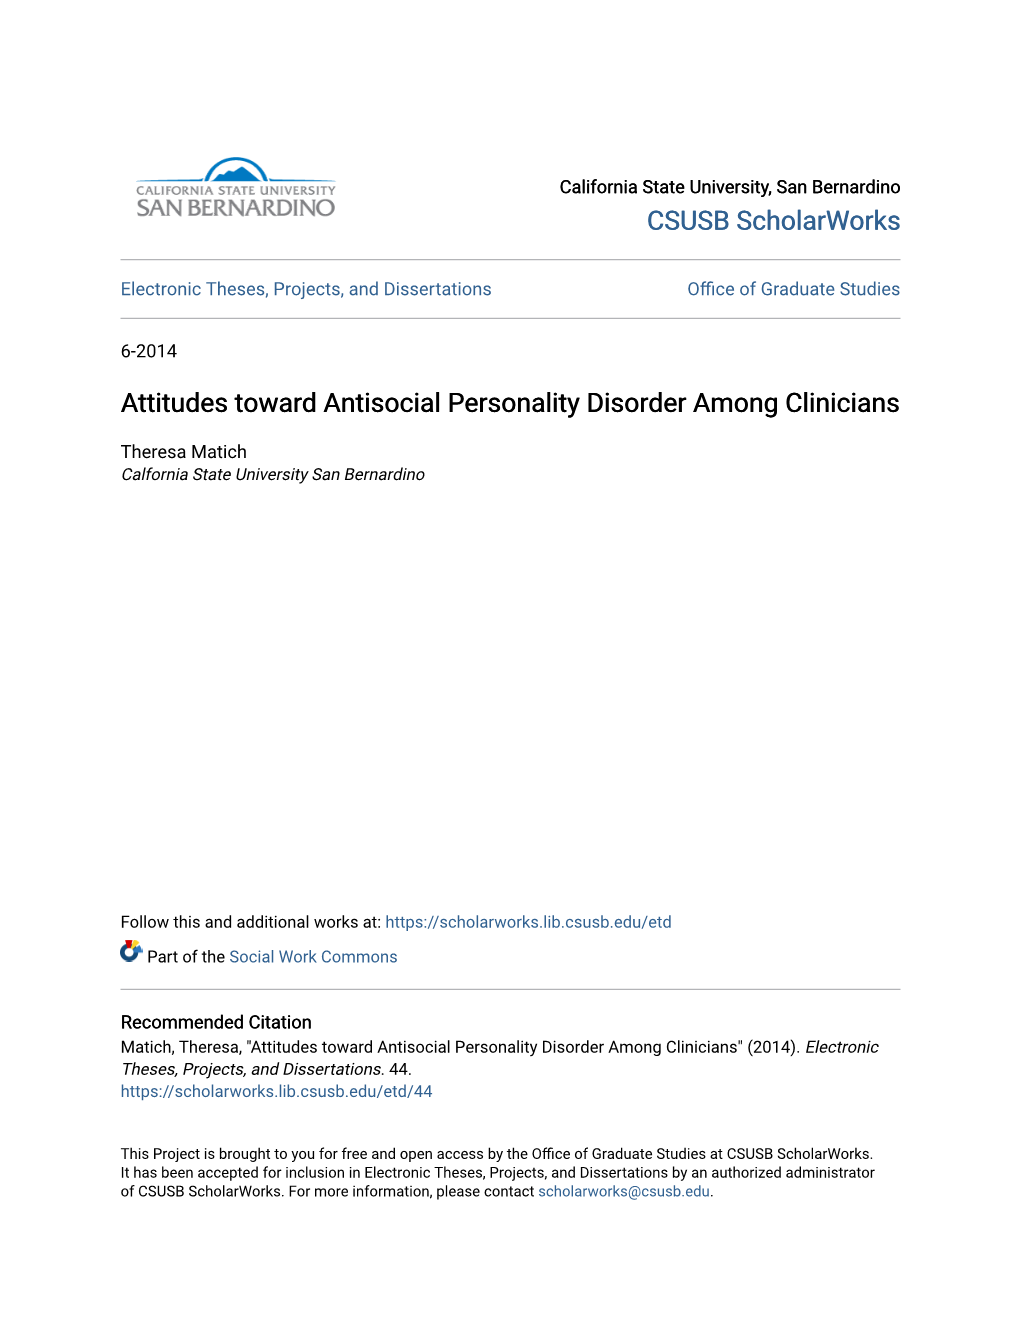 Attitudes Toward Antisocial Personality Disorder Among Clinicians